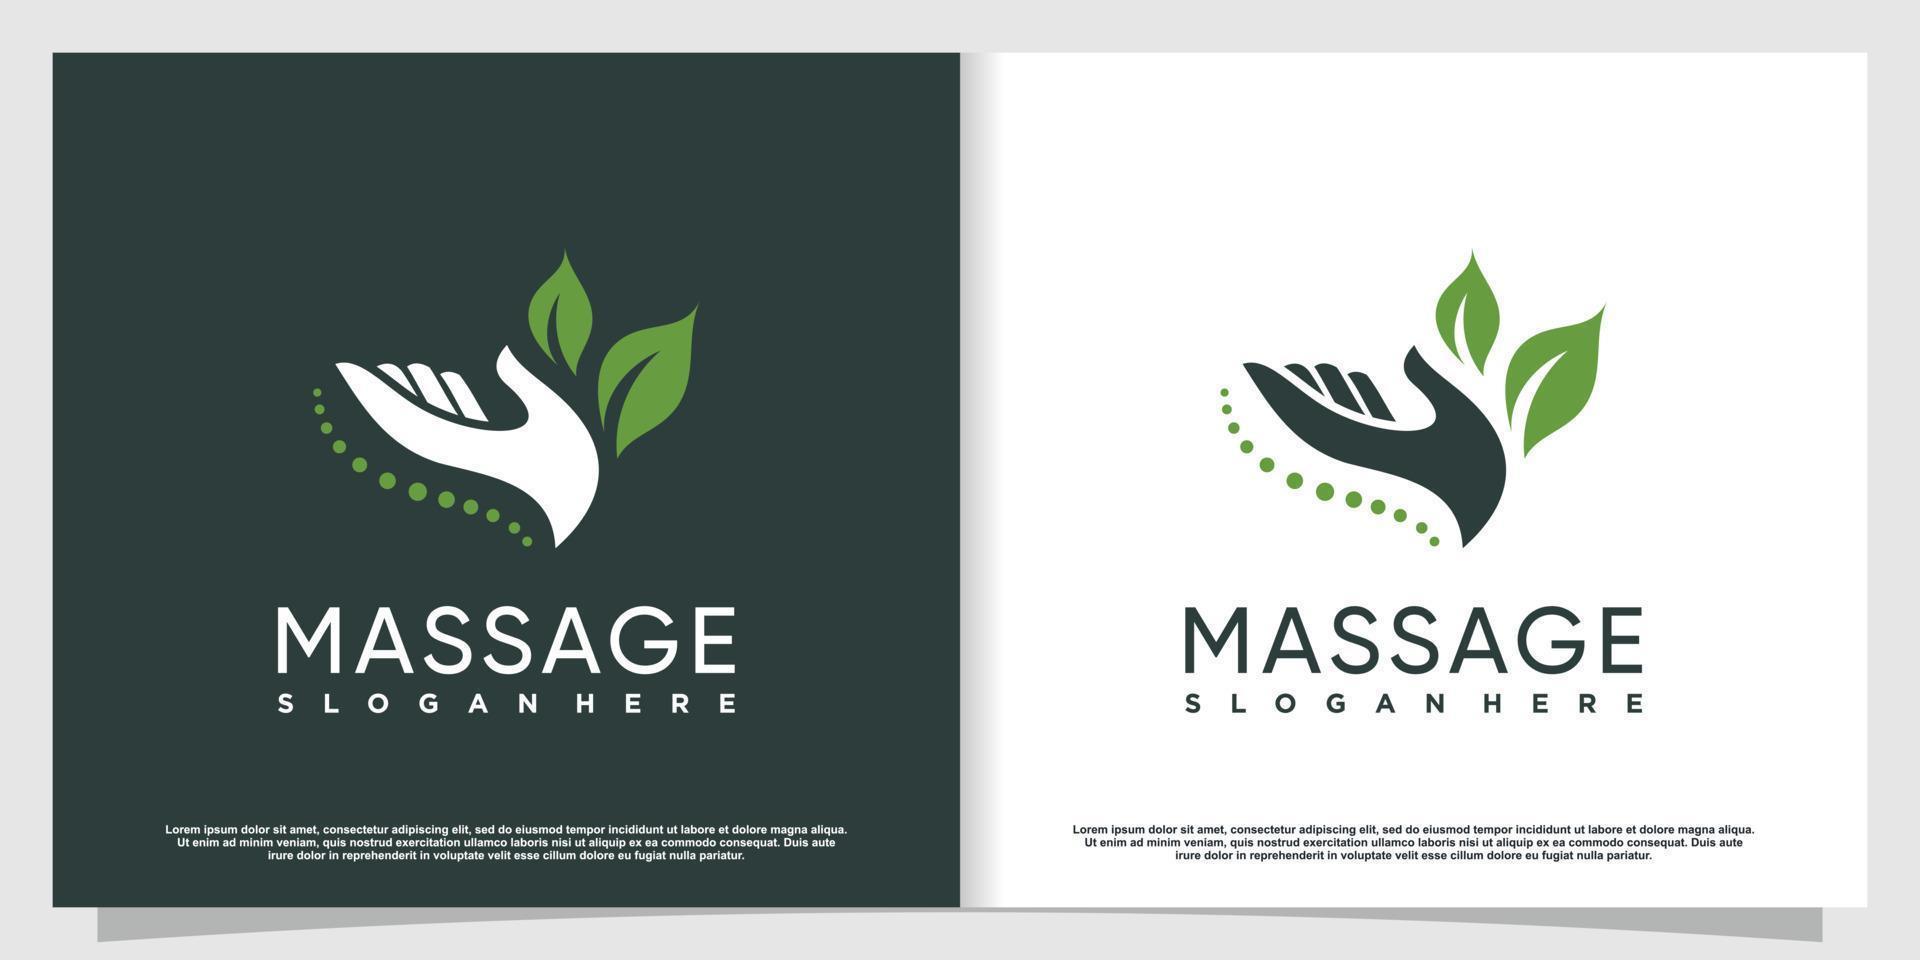 Massage Logo Design With Creative Concept Premium Vector 9364102 Vector Art At Vecteezy